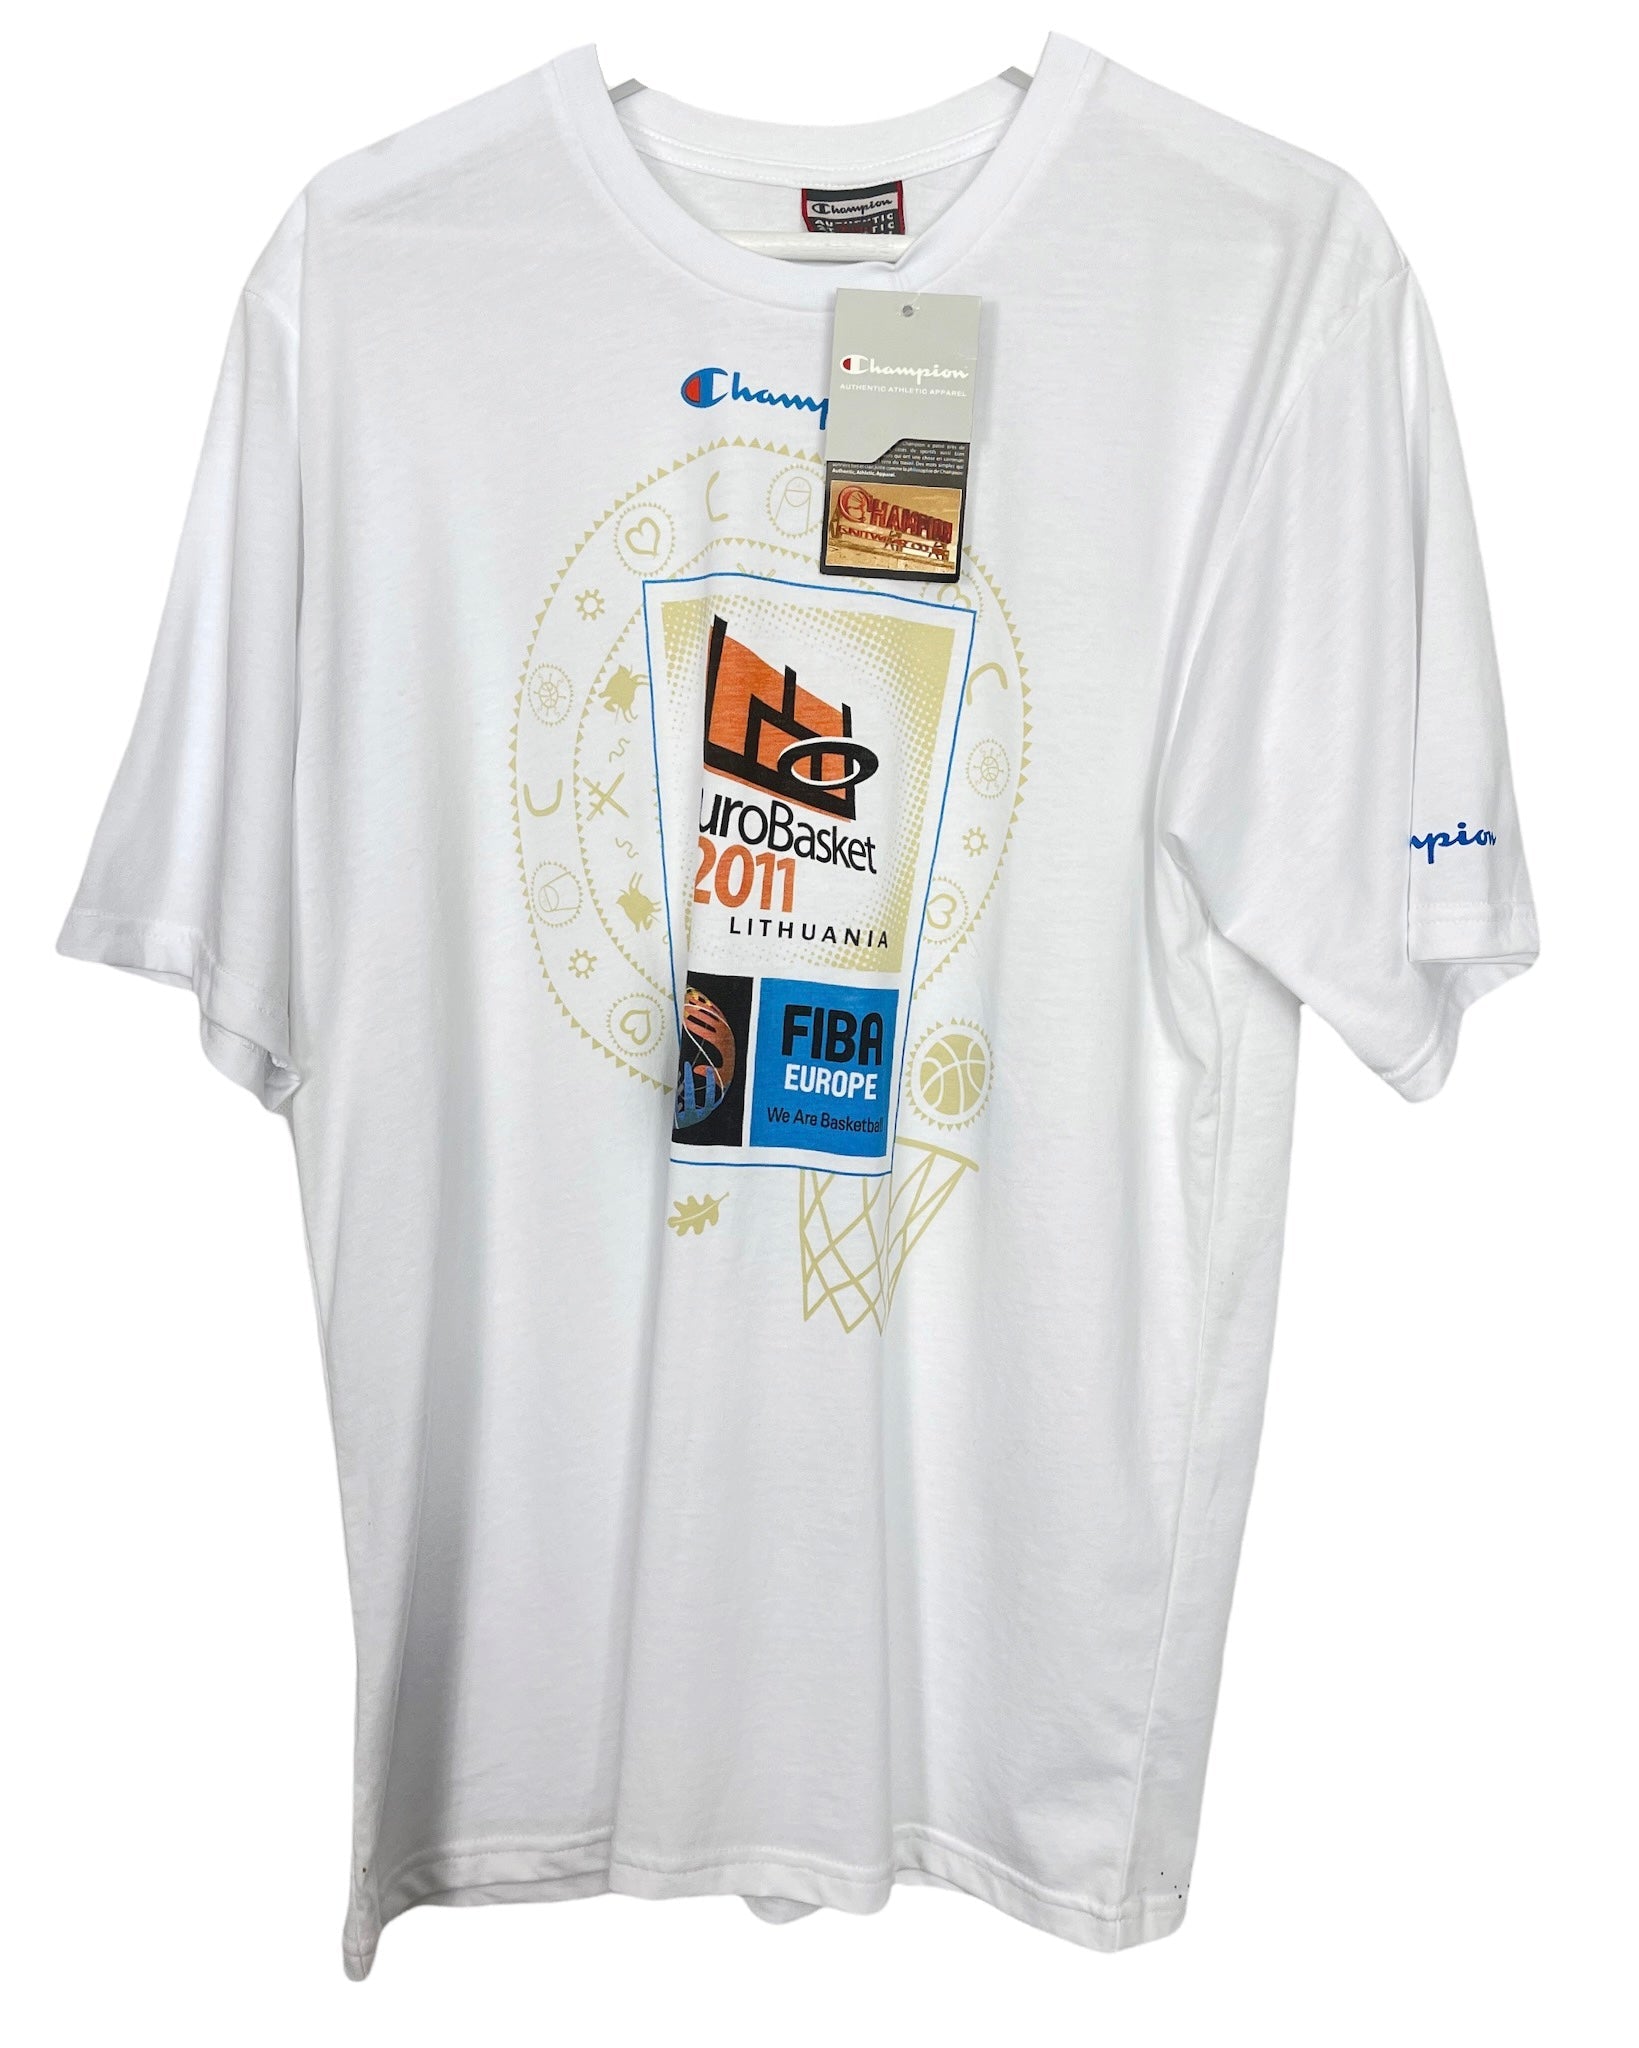  T-shirt Champion T-shirt - EuroBasket 2011 - XL - PLOMOSTORE